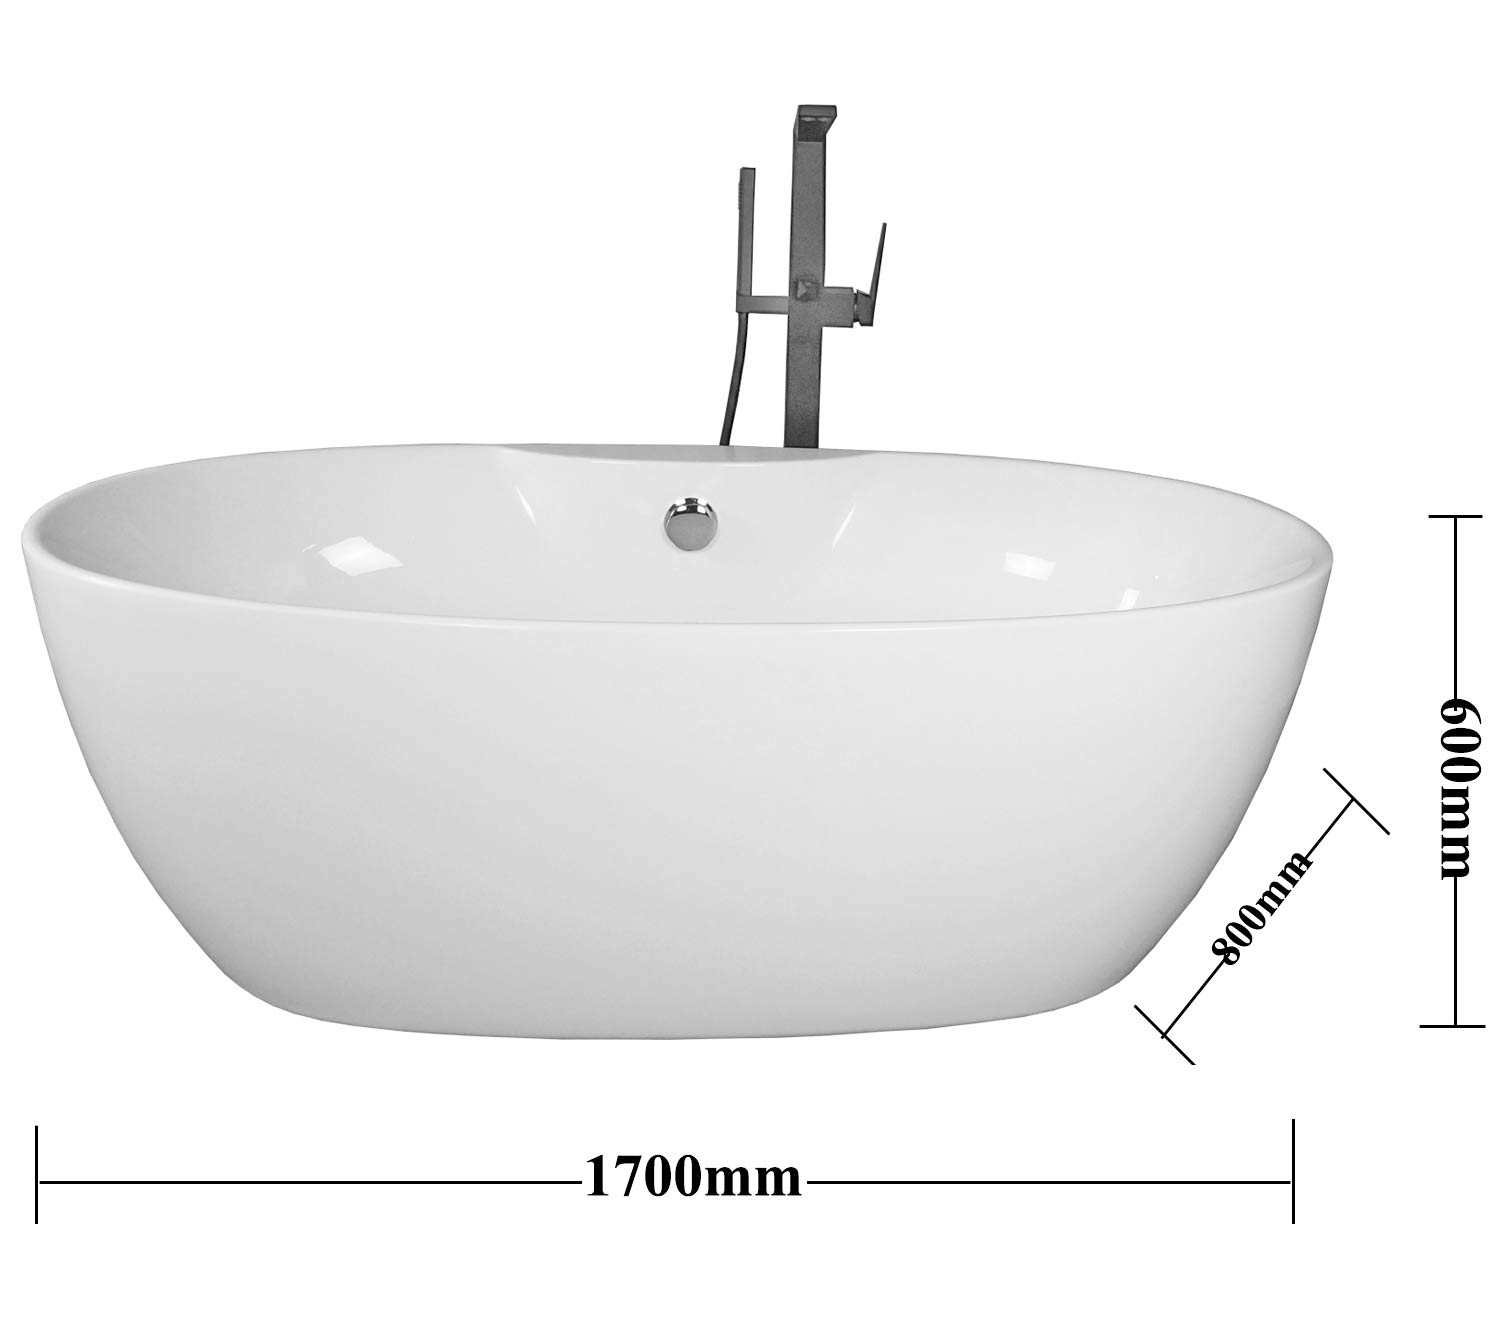 Freestanding bath tubs